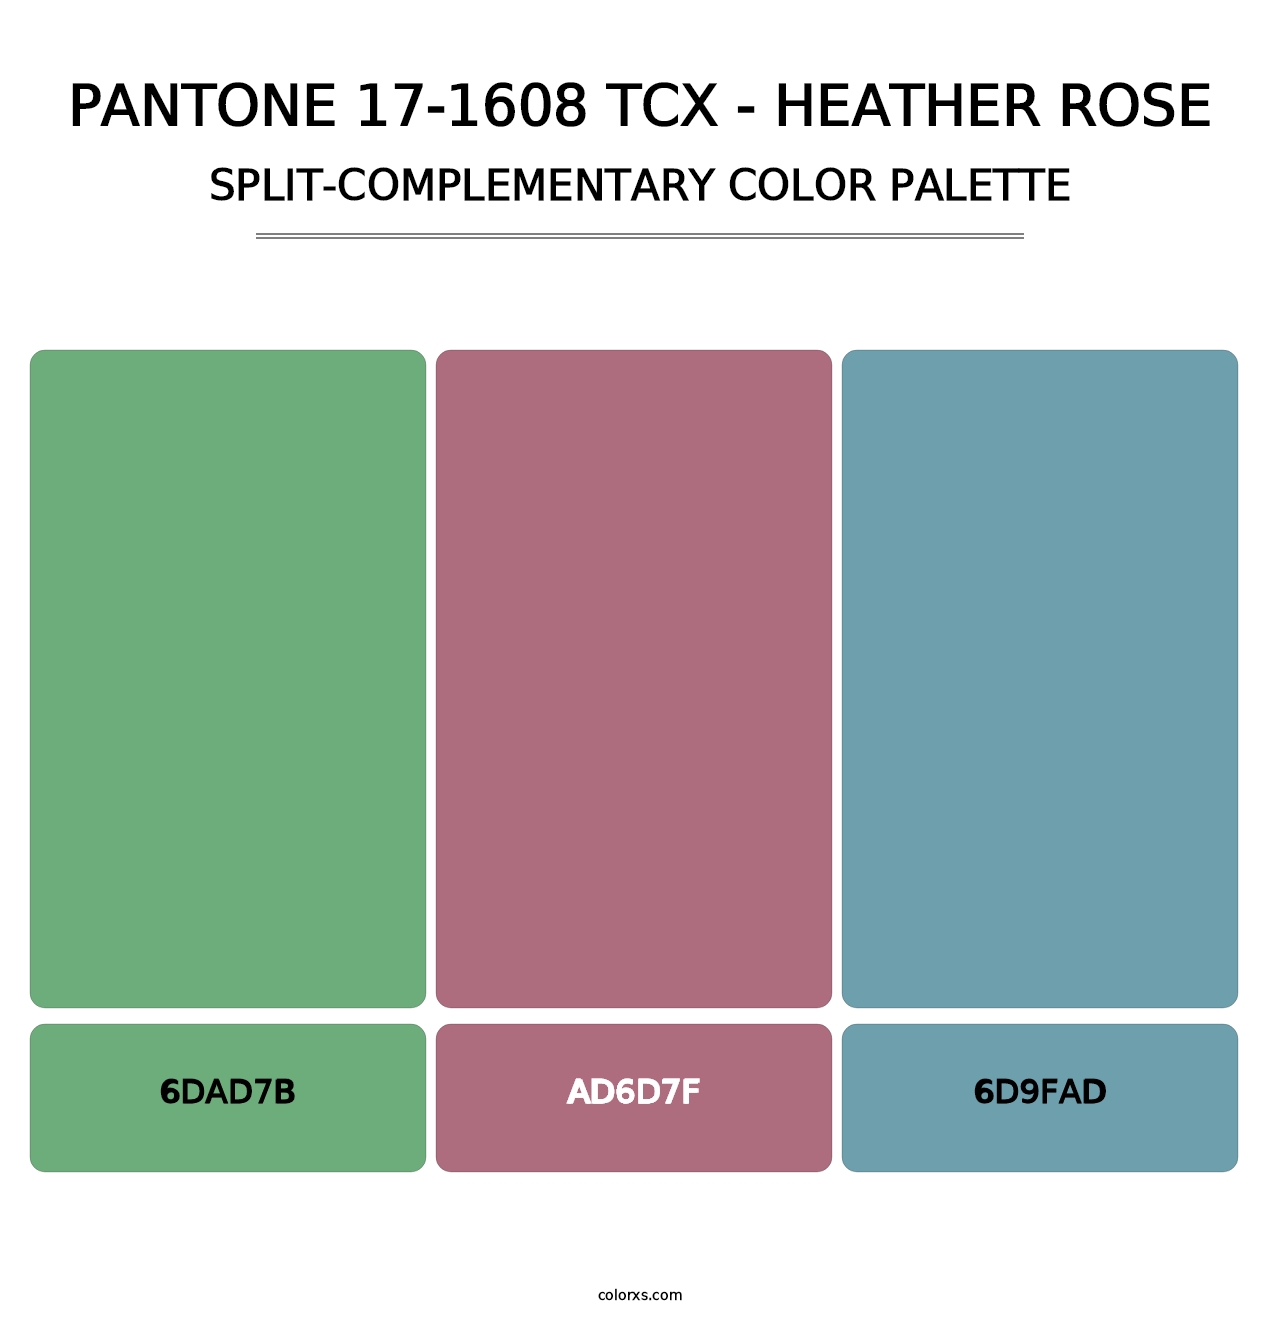 PANTONE 17-1608 TCX - Heather Rose - Split-Complementary Color Palette